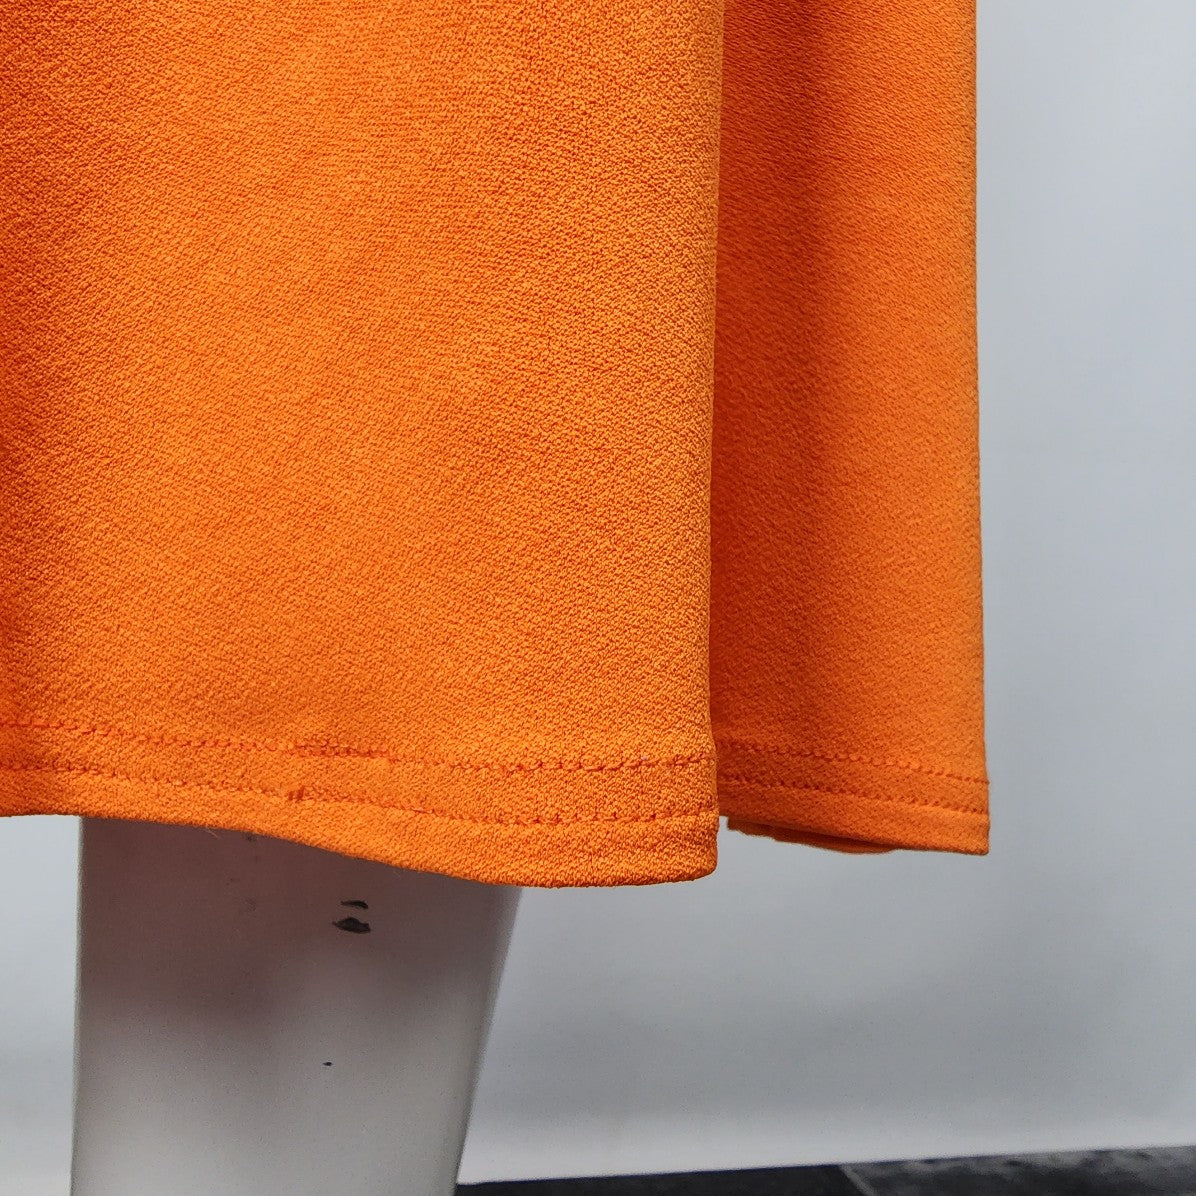 Vintage Orange Striped Midi Dress Size S